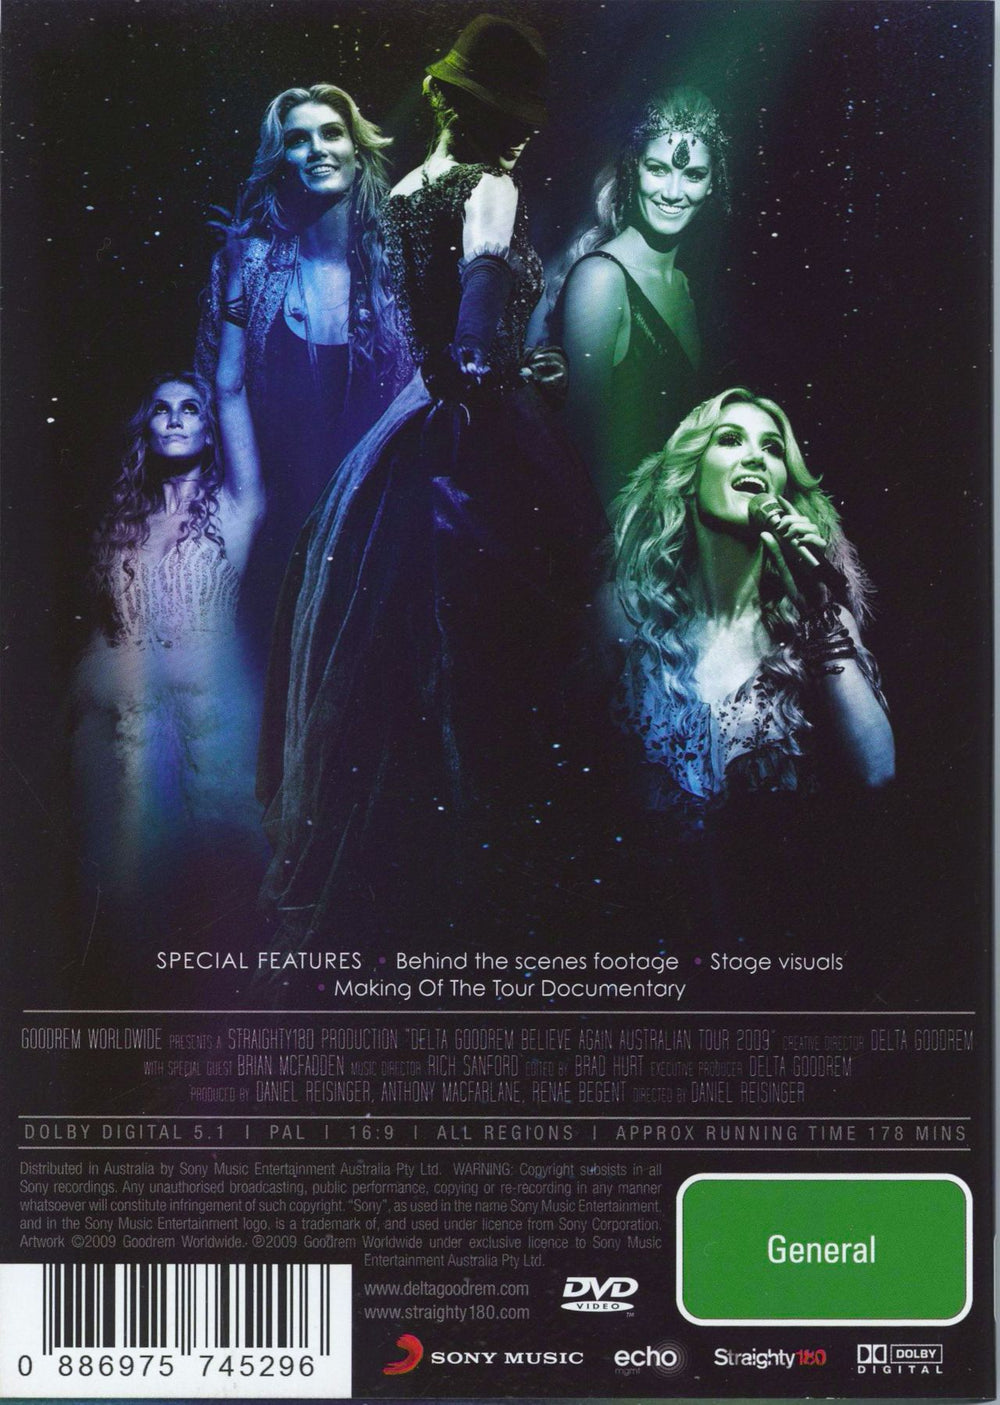 Delta Goodrem Believe Again Live Tour Australian 2-disc CD/DVD set 886975745296